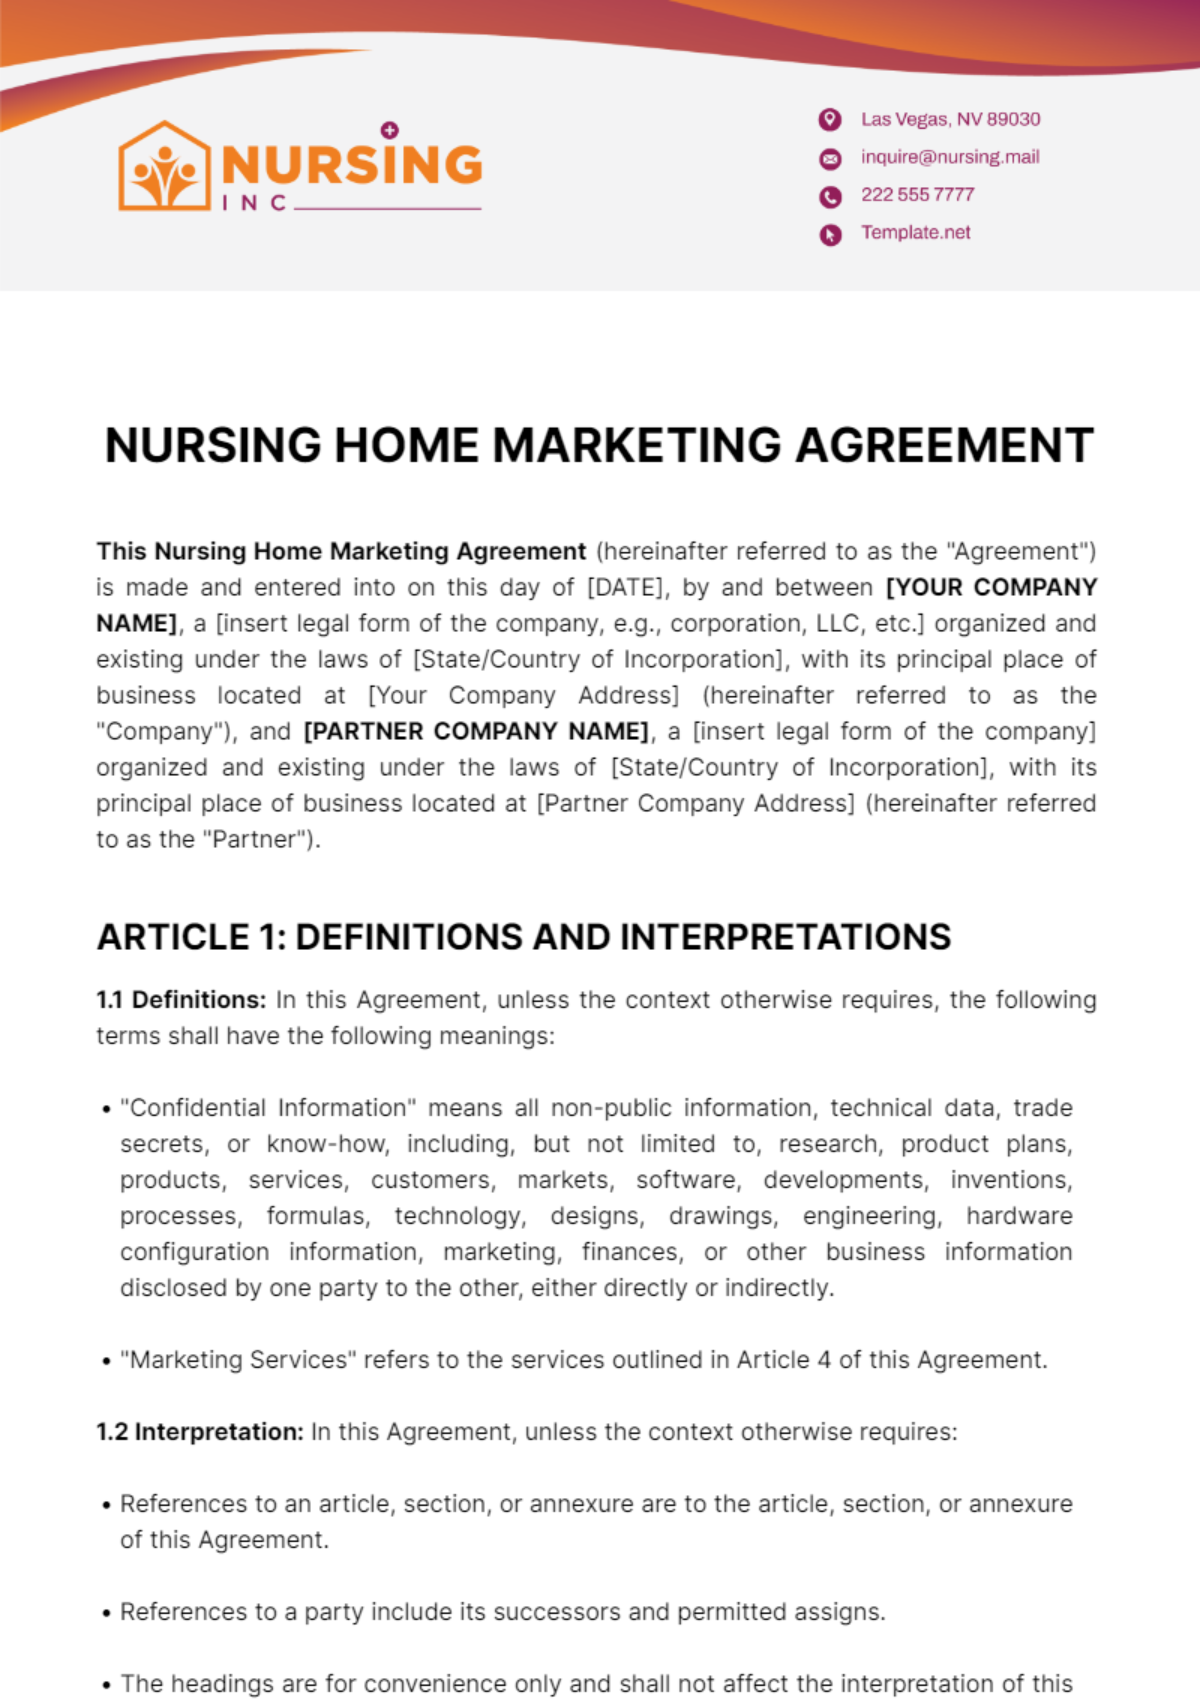 Nursing Home Marketing Agreement Template